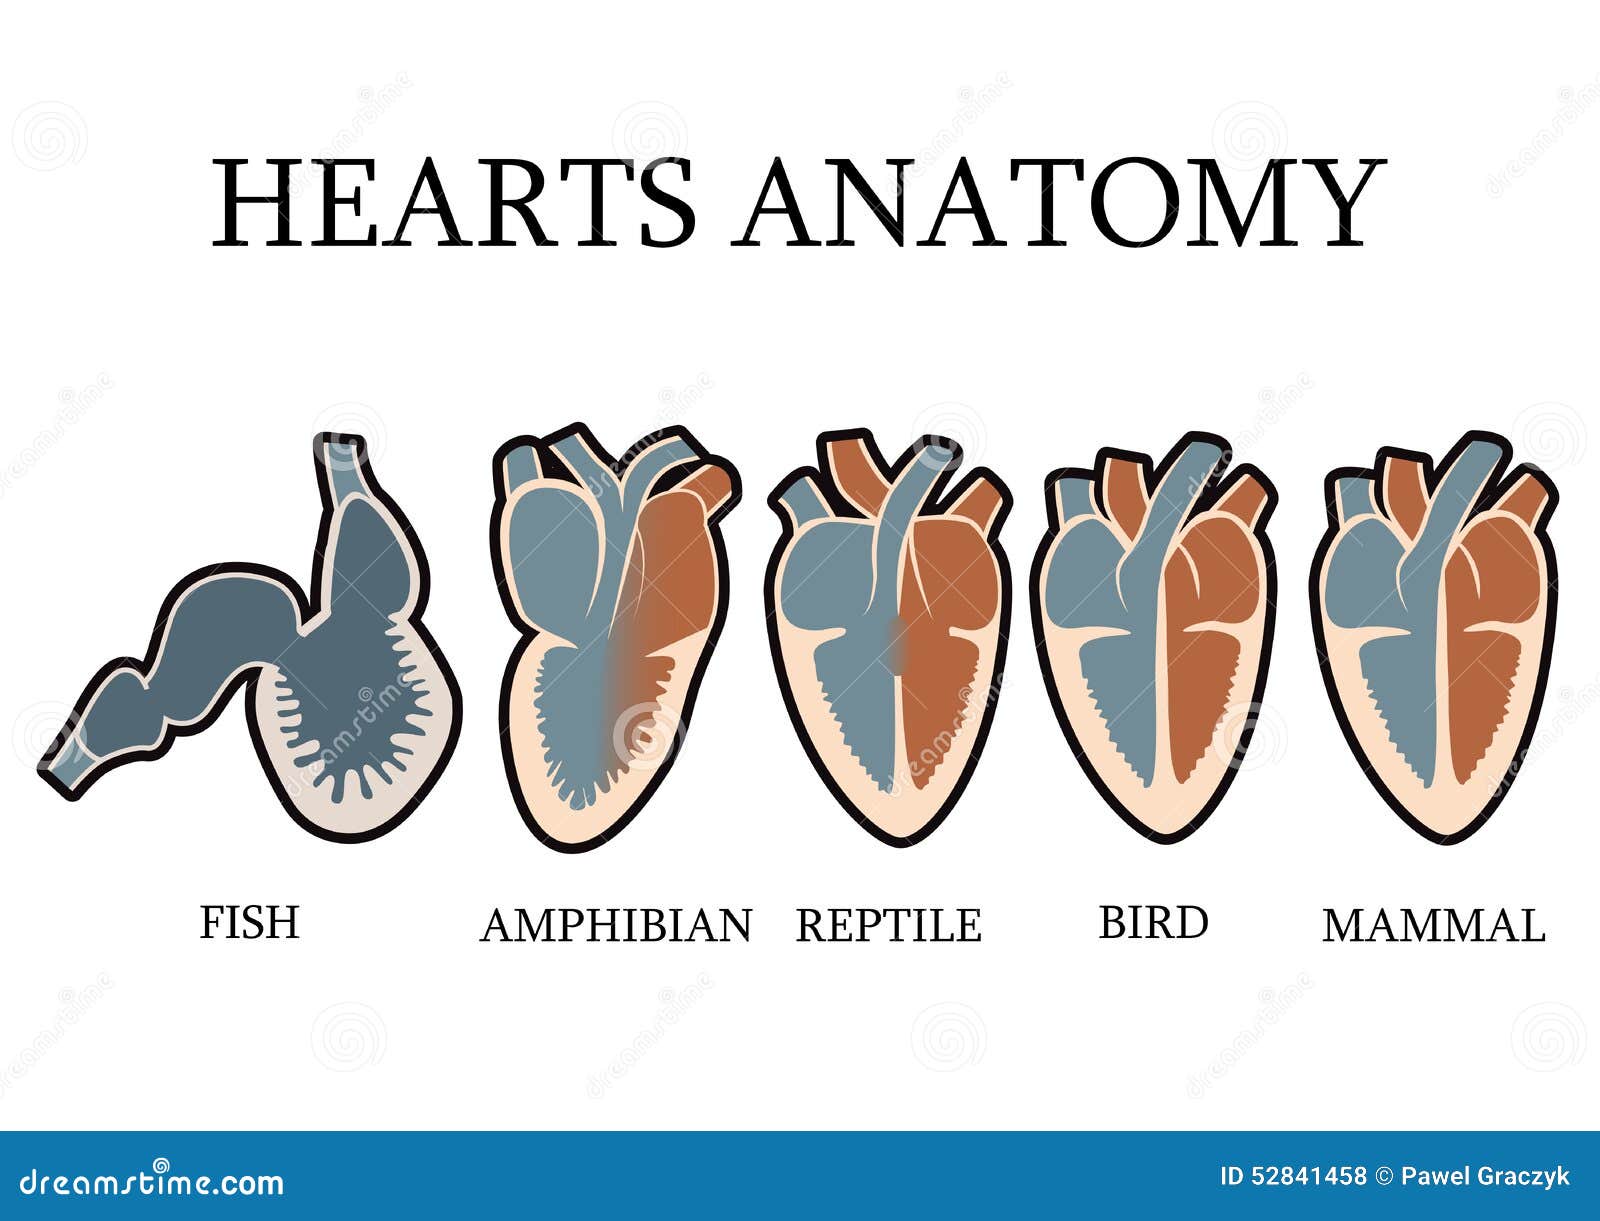 comparison of cardiac anatomy of vertebrates